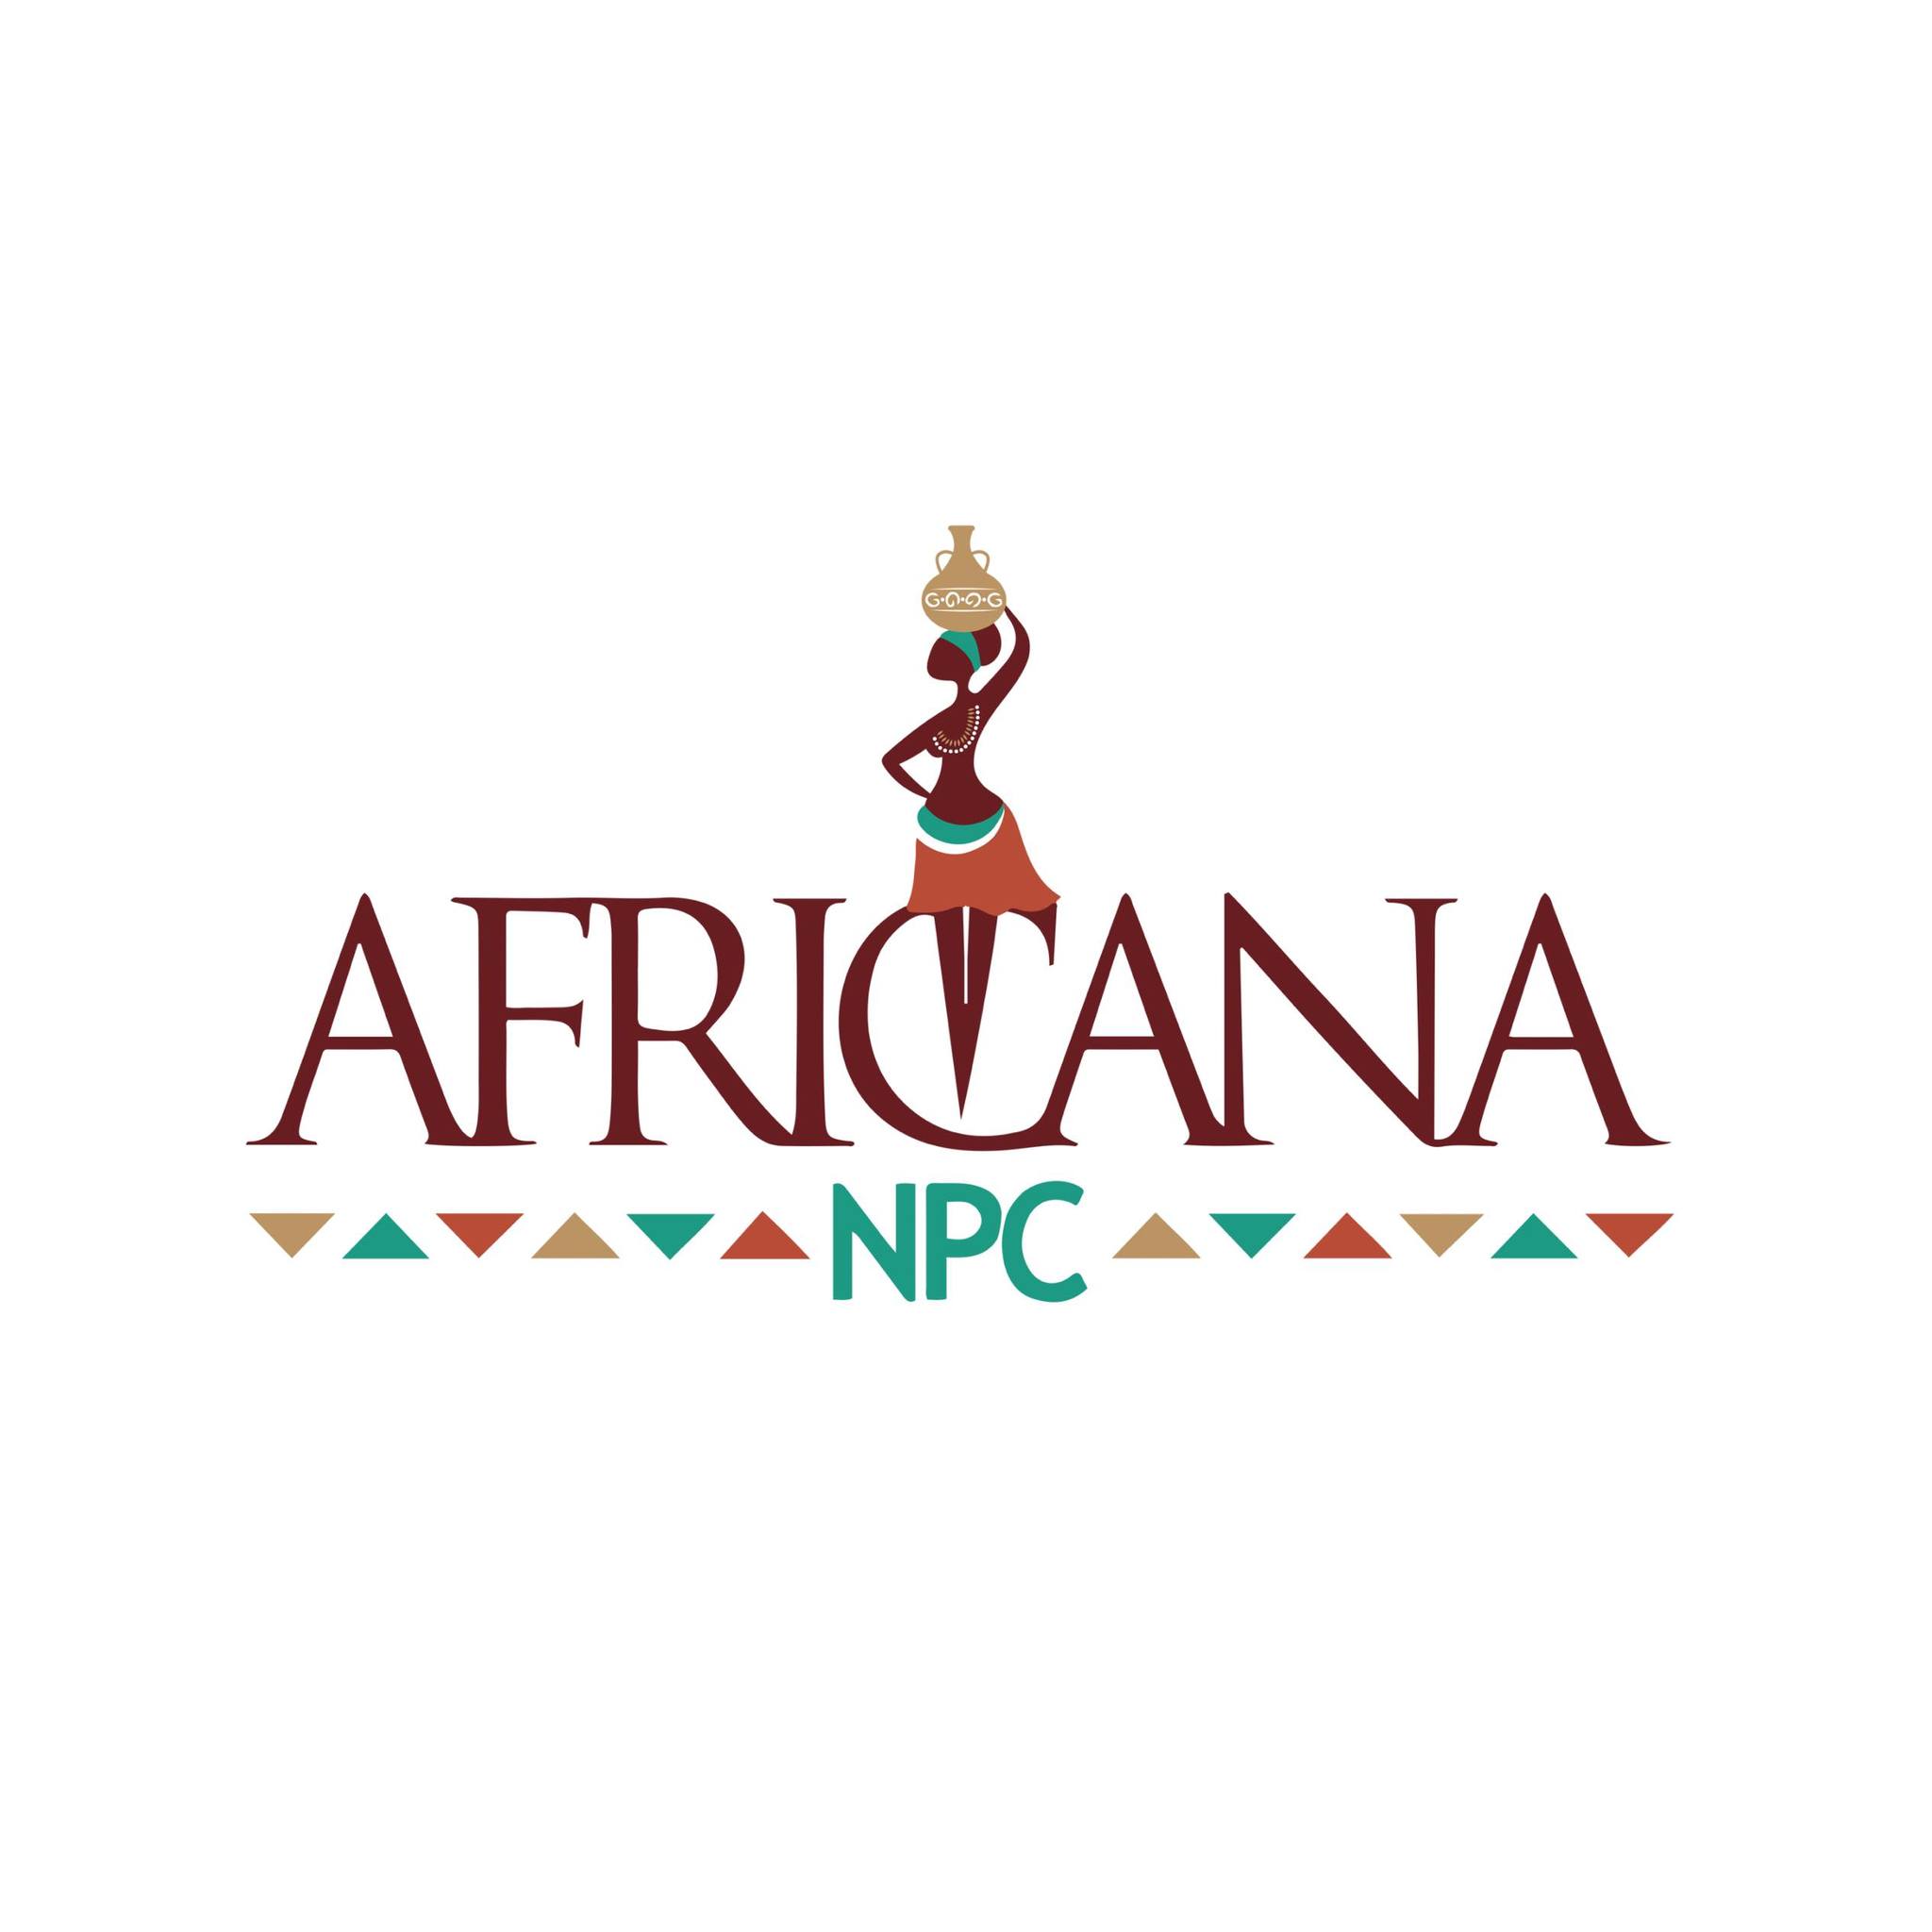 Africana NPC